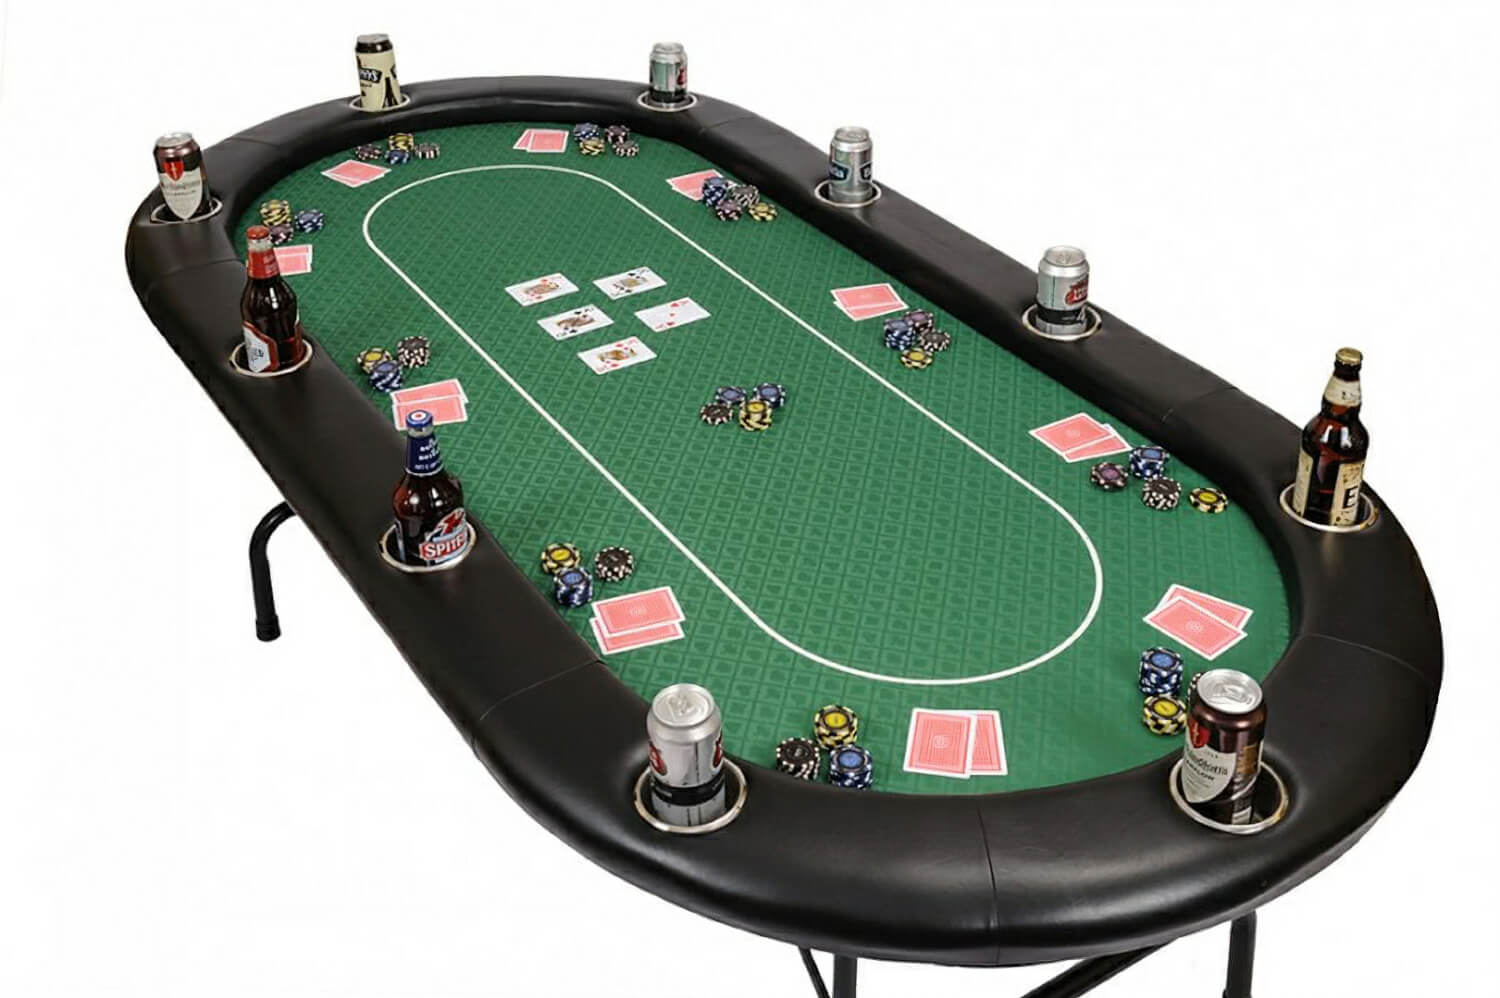 professional poker players illegal casino